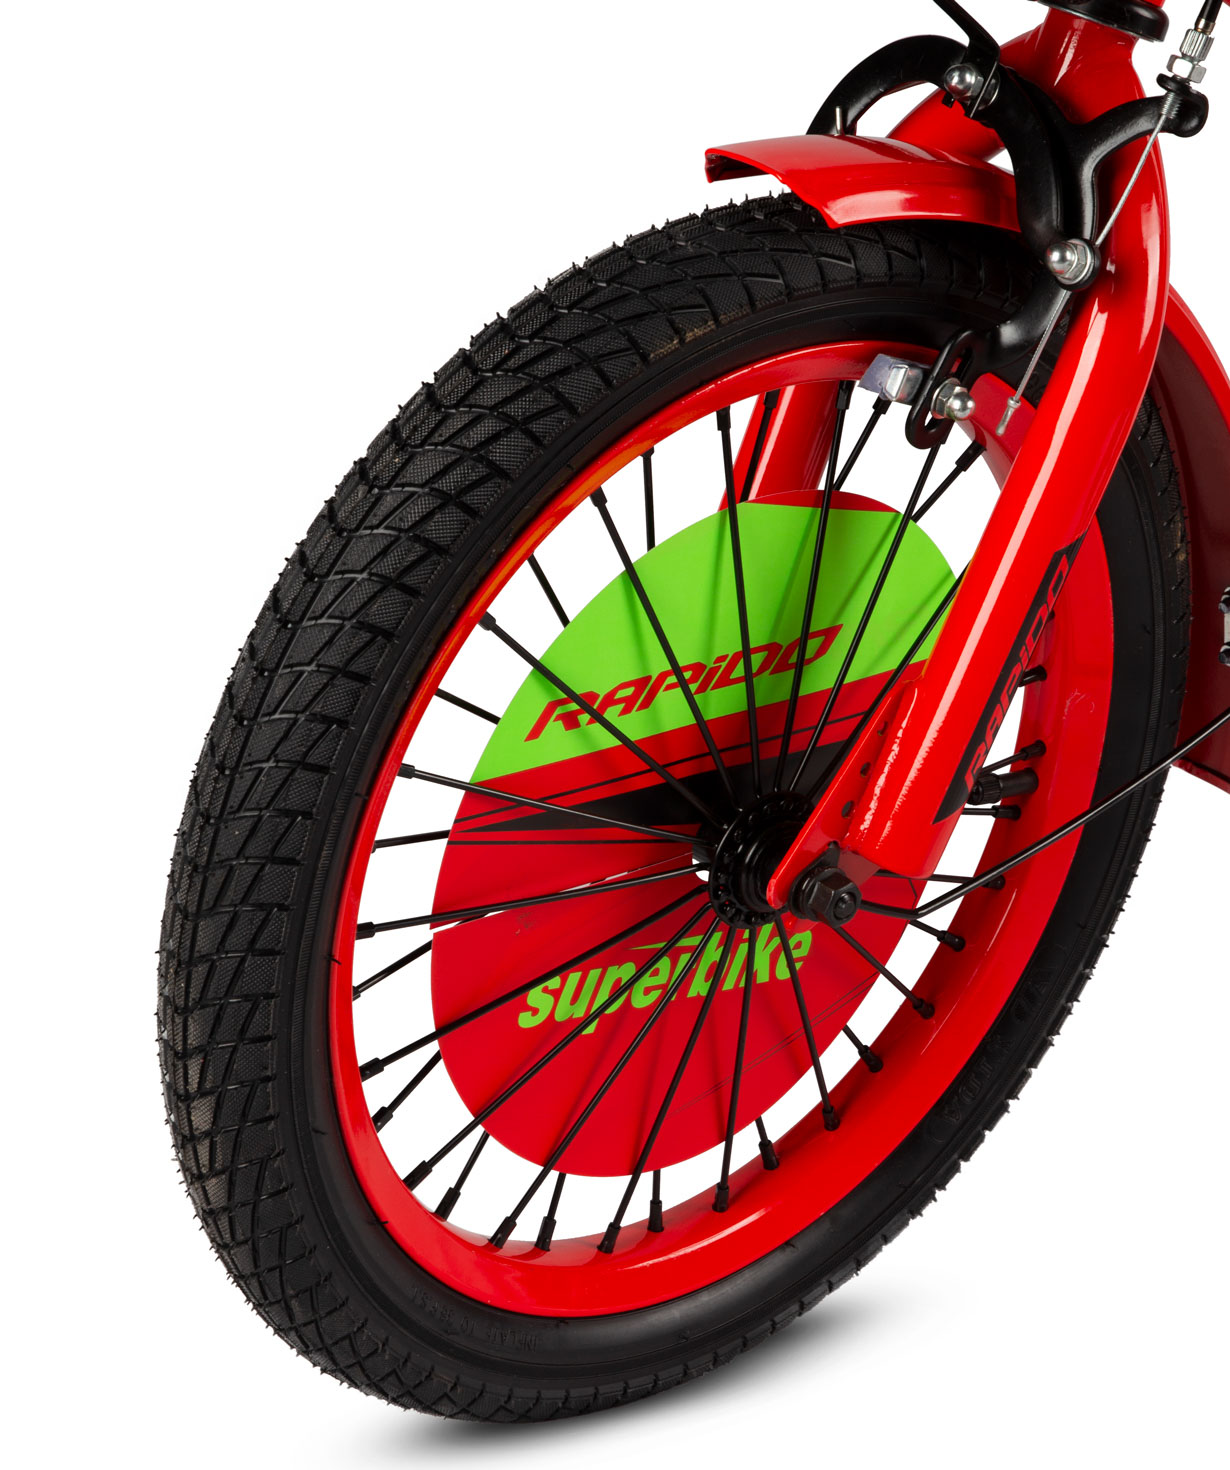 Bicycle `Rapido` 16-2R08